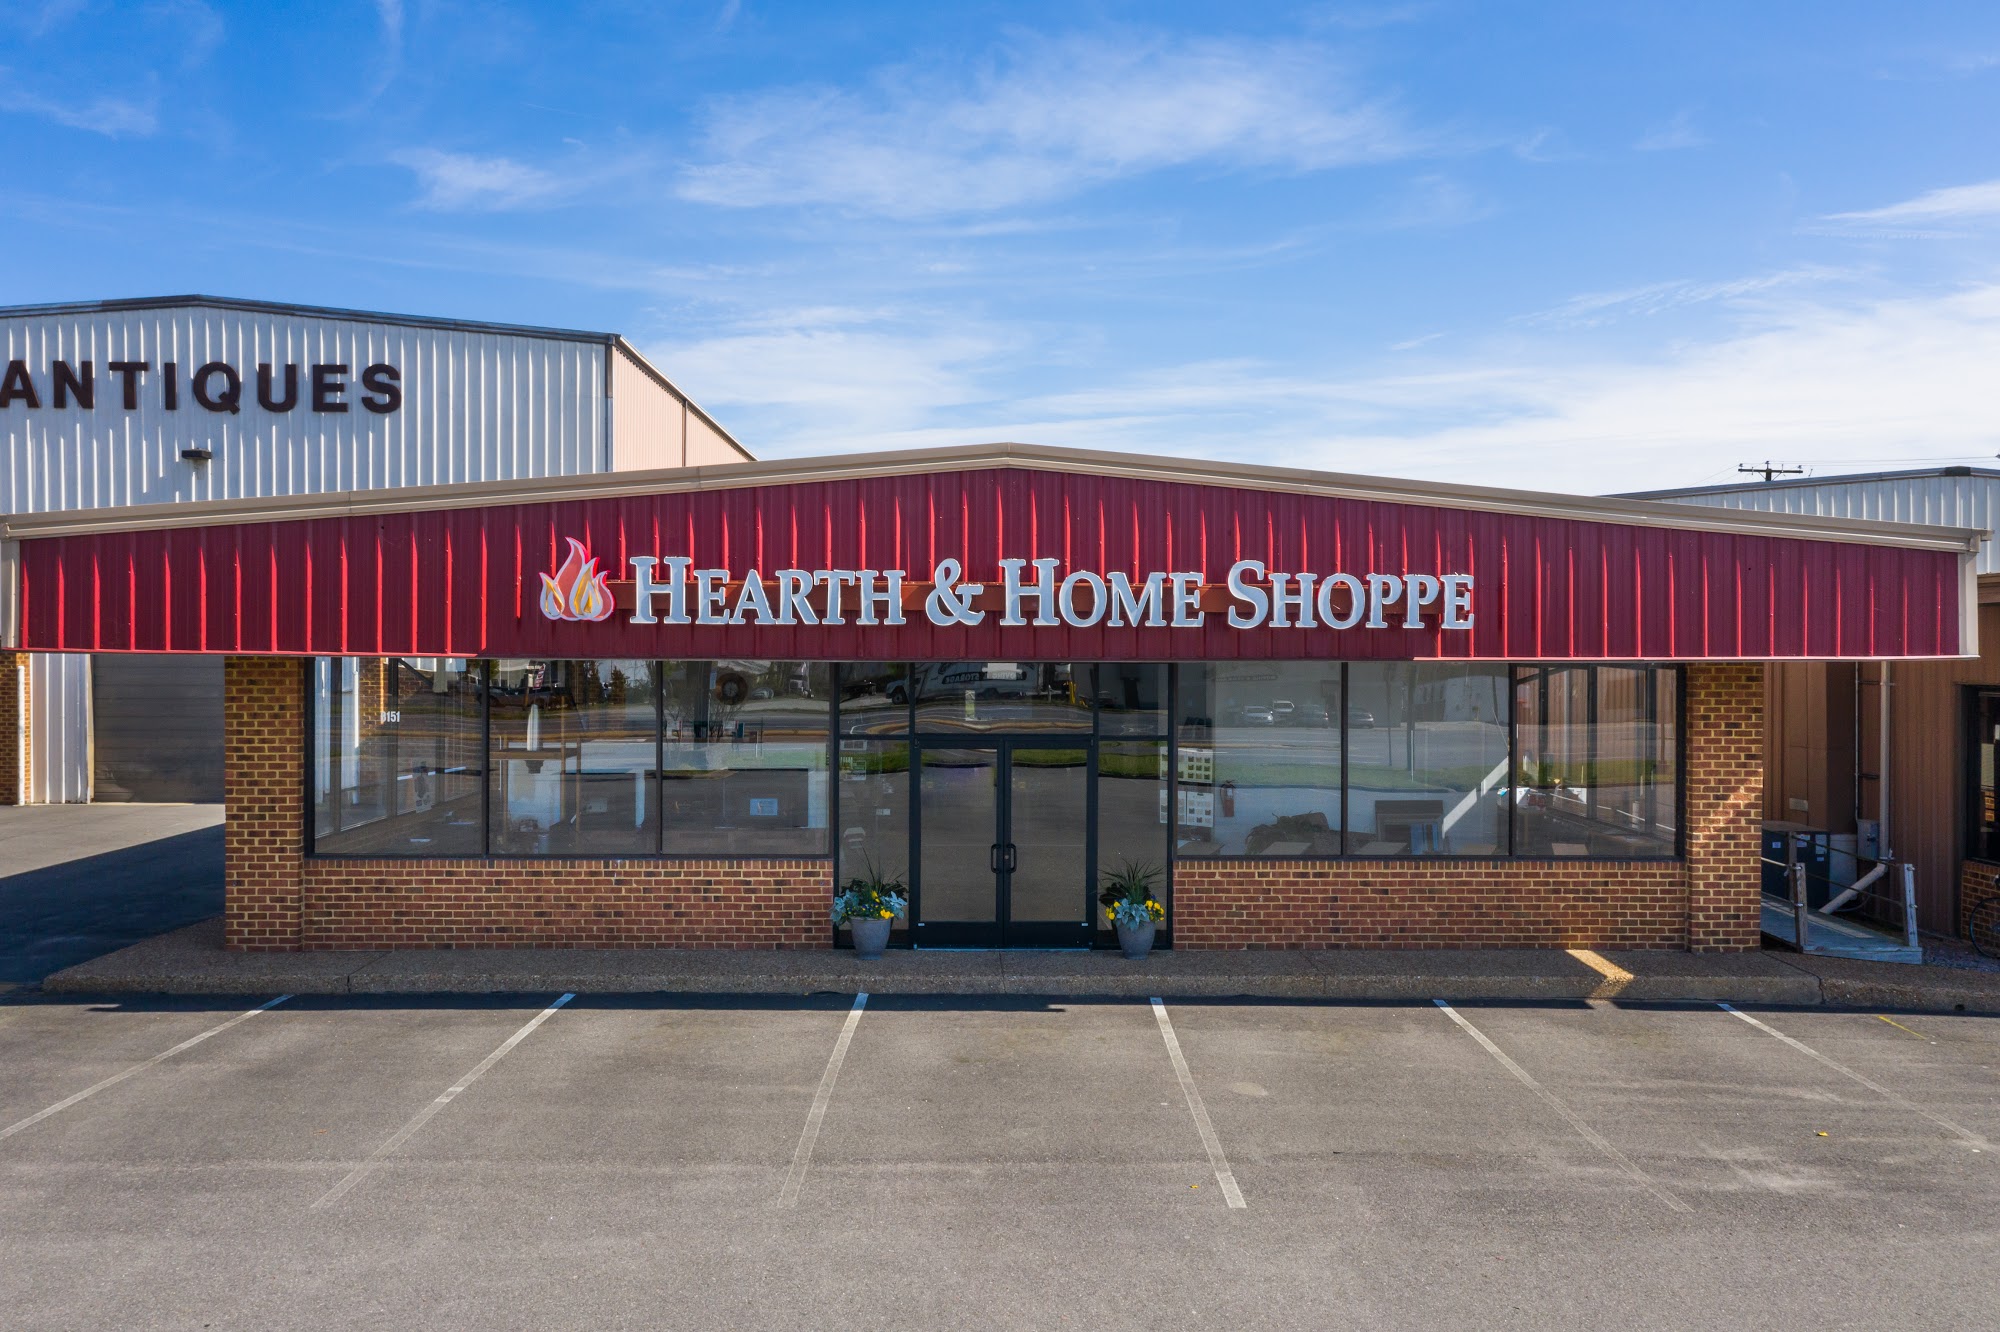 Hearth and Home Shoppe